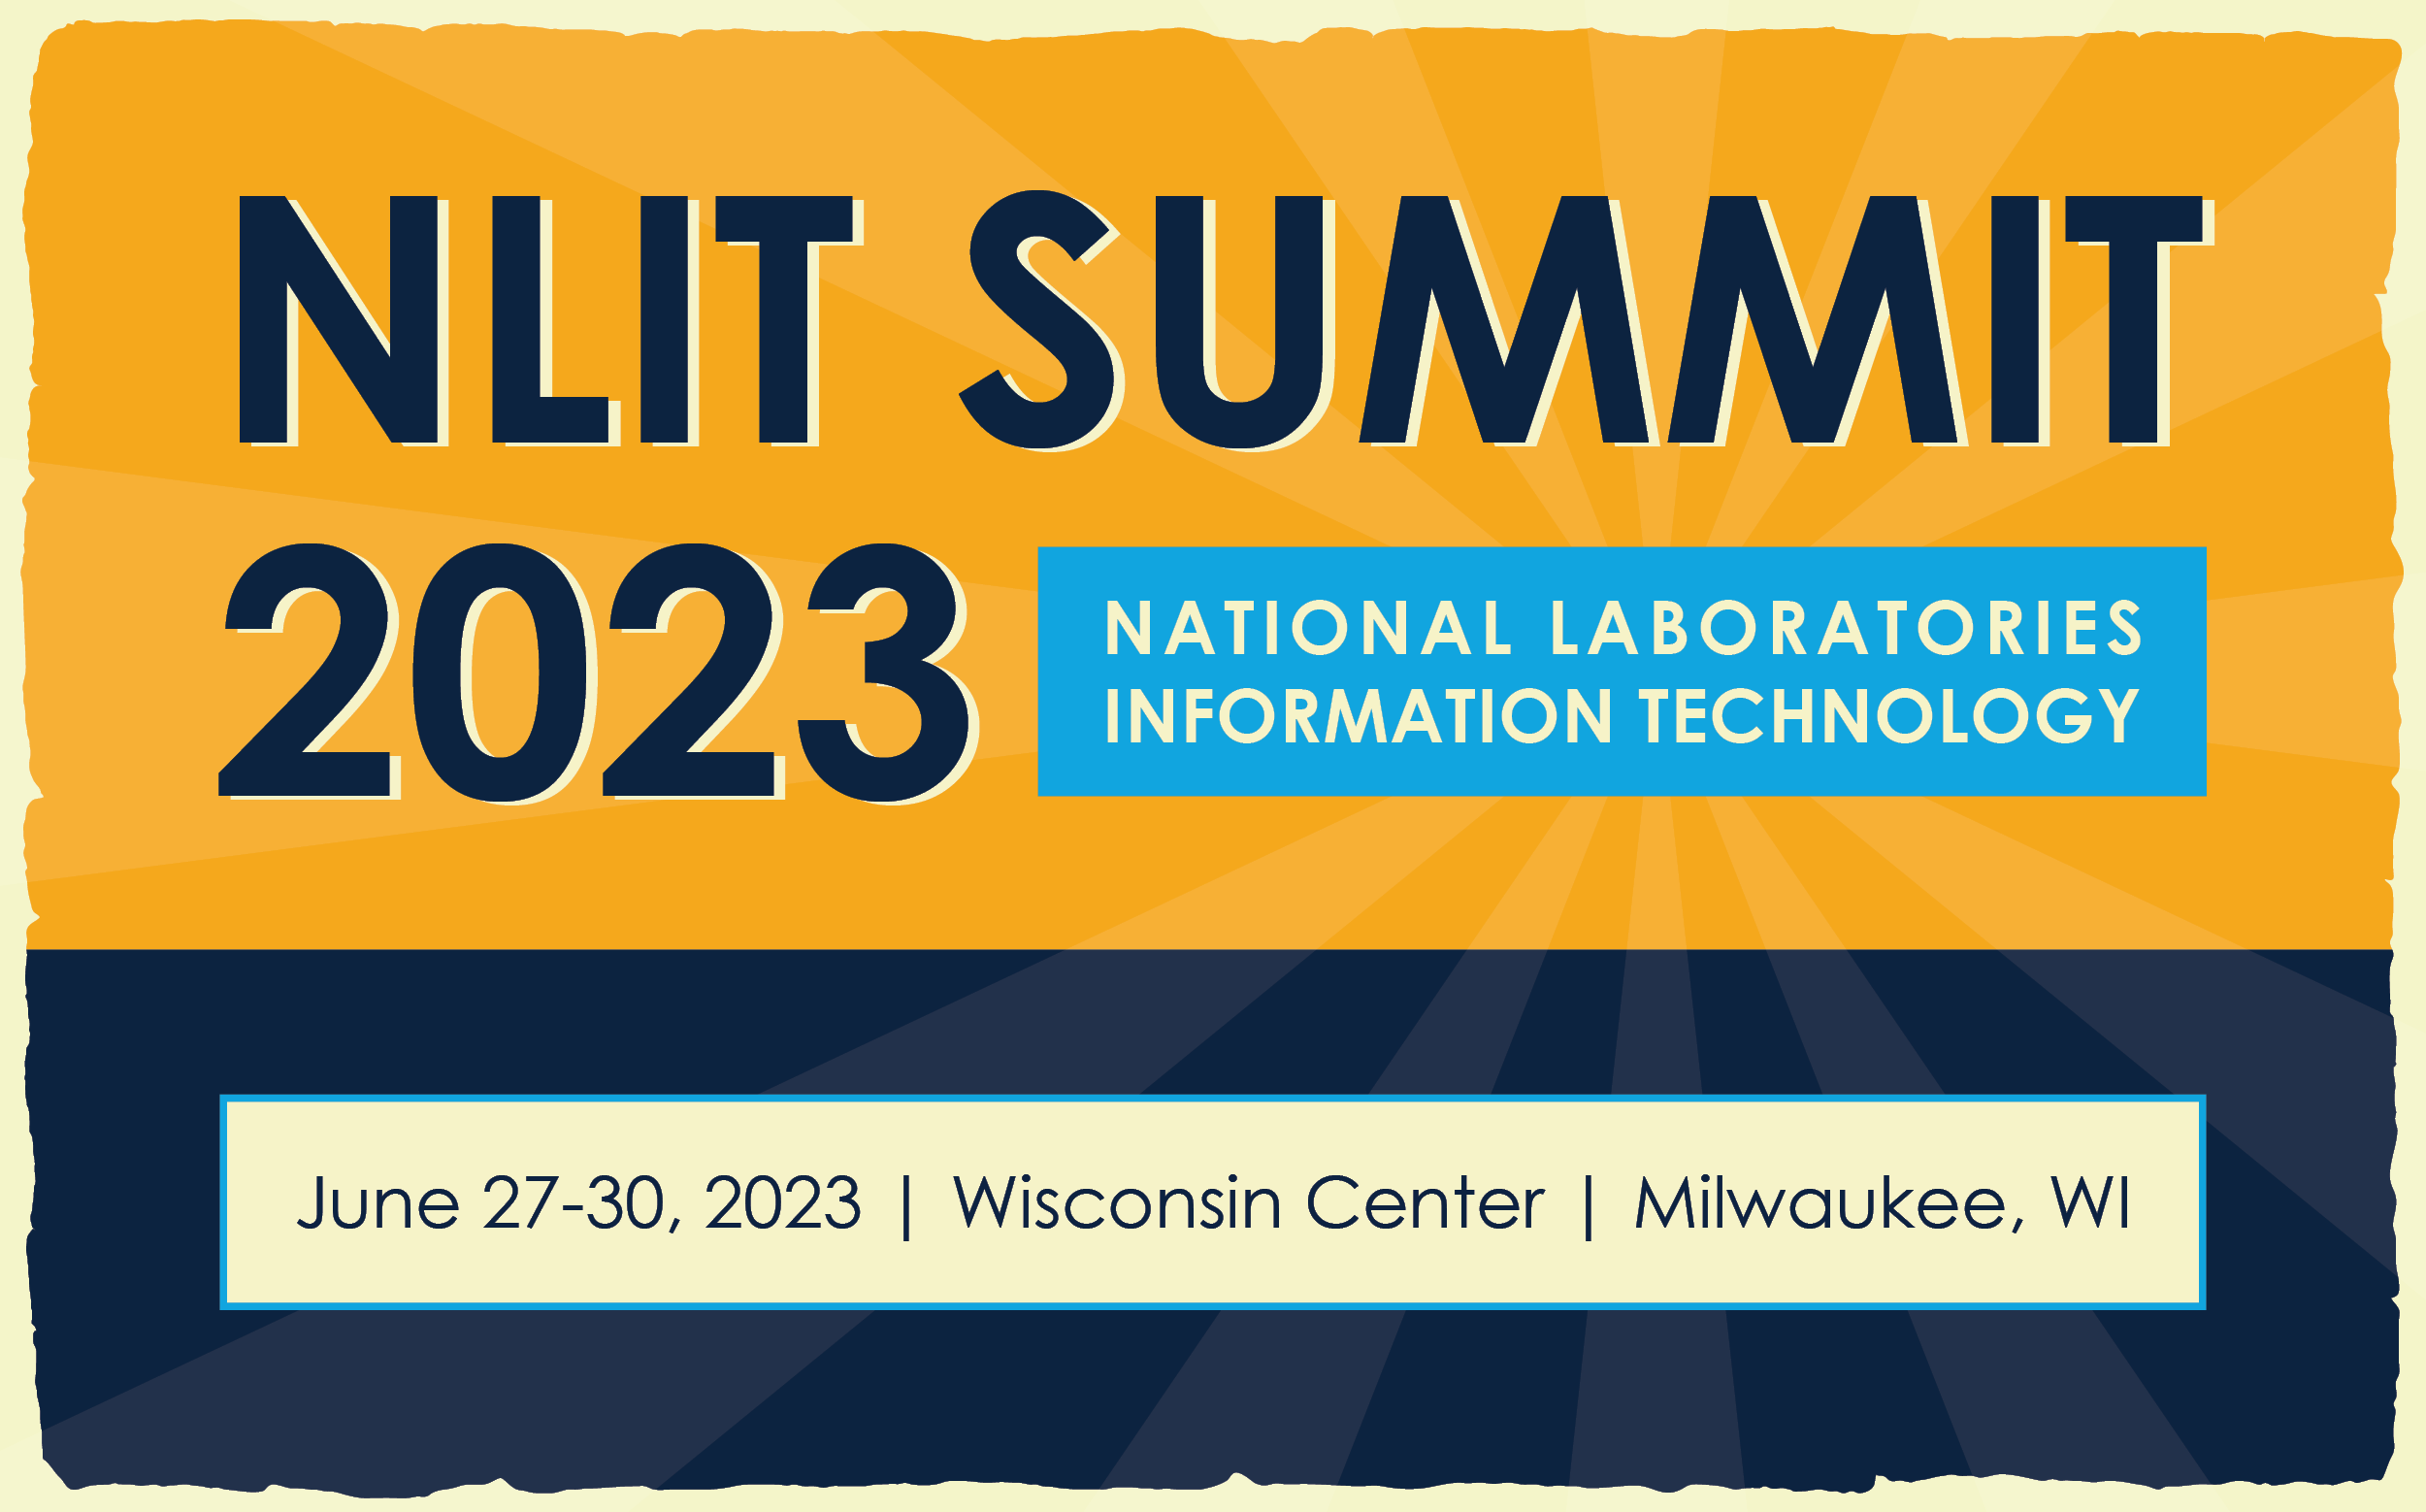 NLIT summit 2023